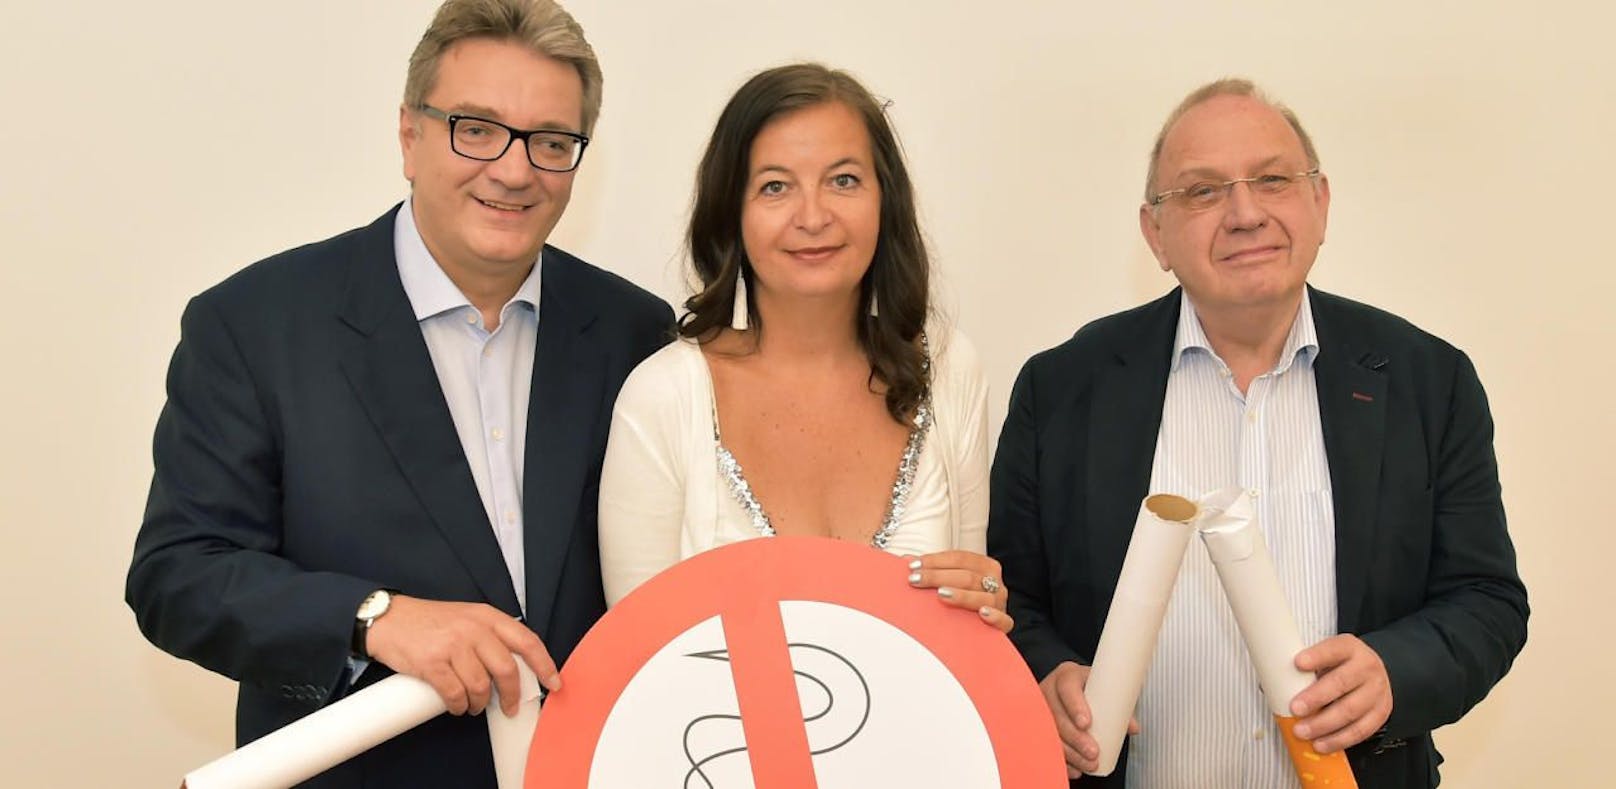 Gesundheitstadtrat Peter Hacker (SPÖ), Umweltstadträtin Ulli Sima und Verfassungsexperte Bernd-Christian Funk 